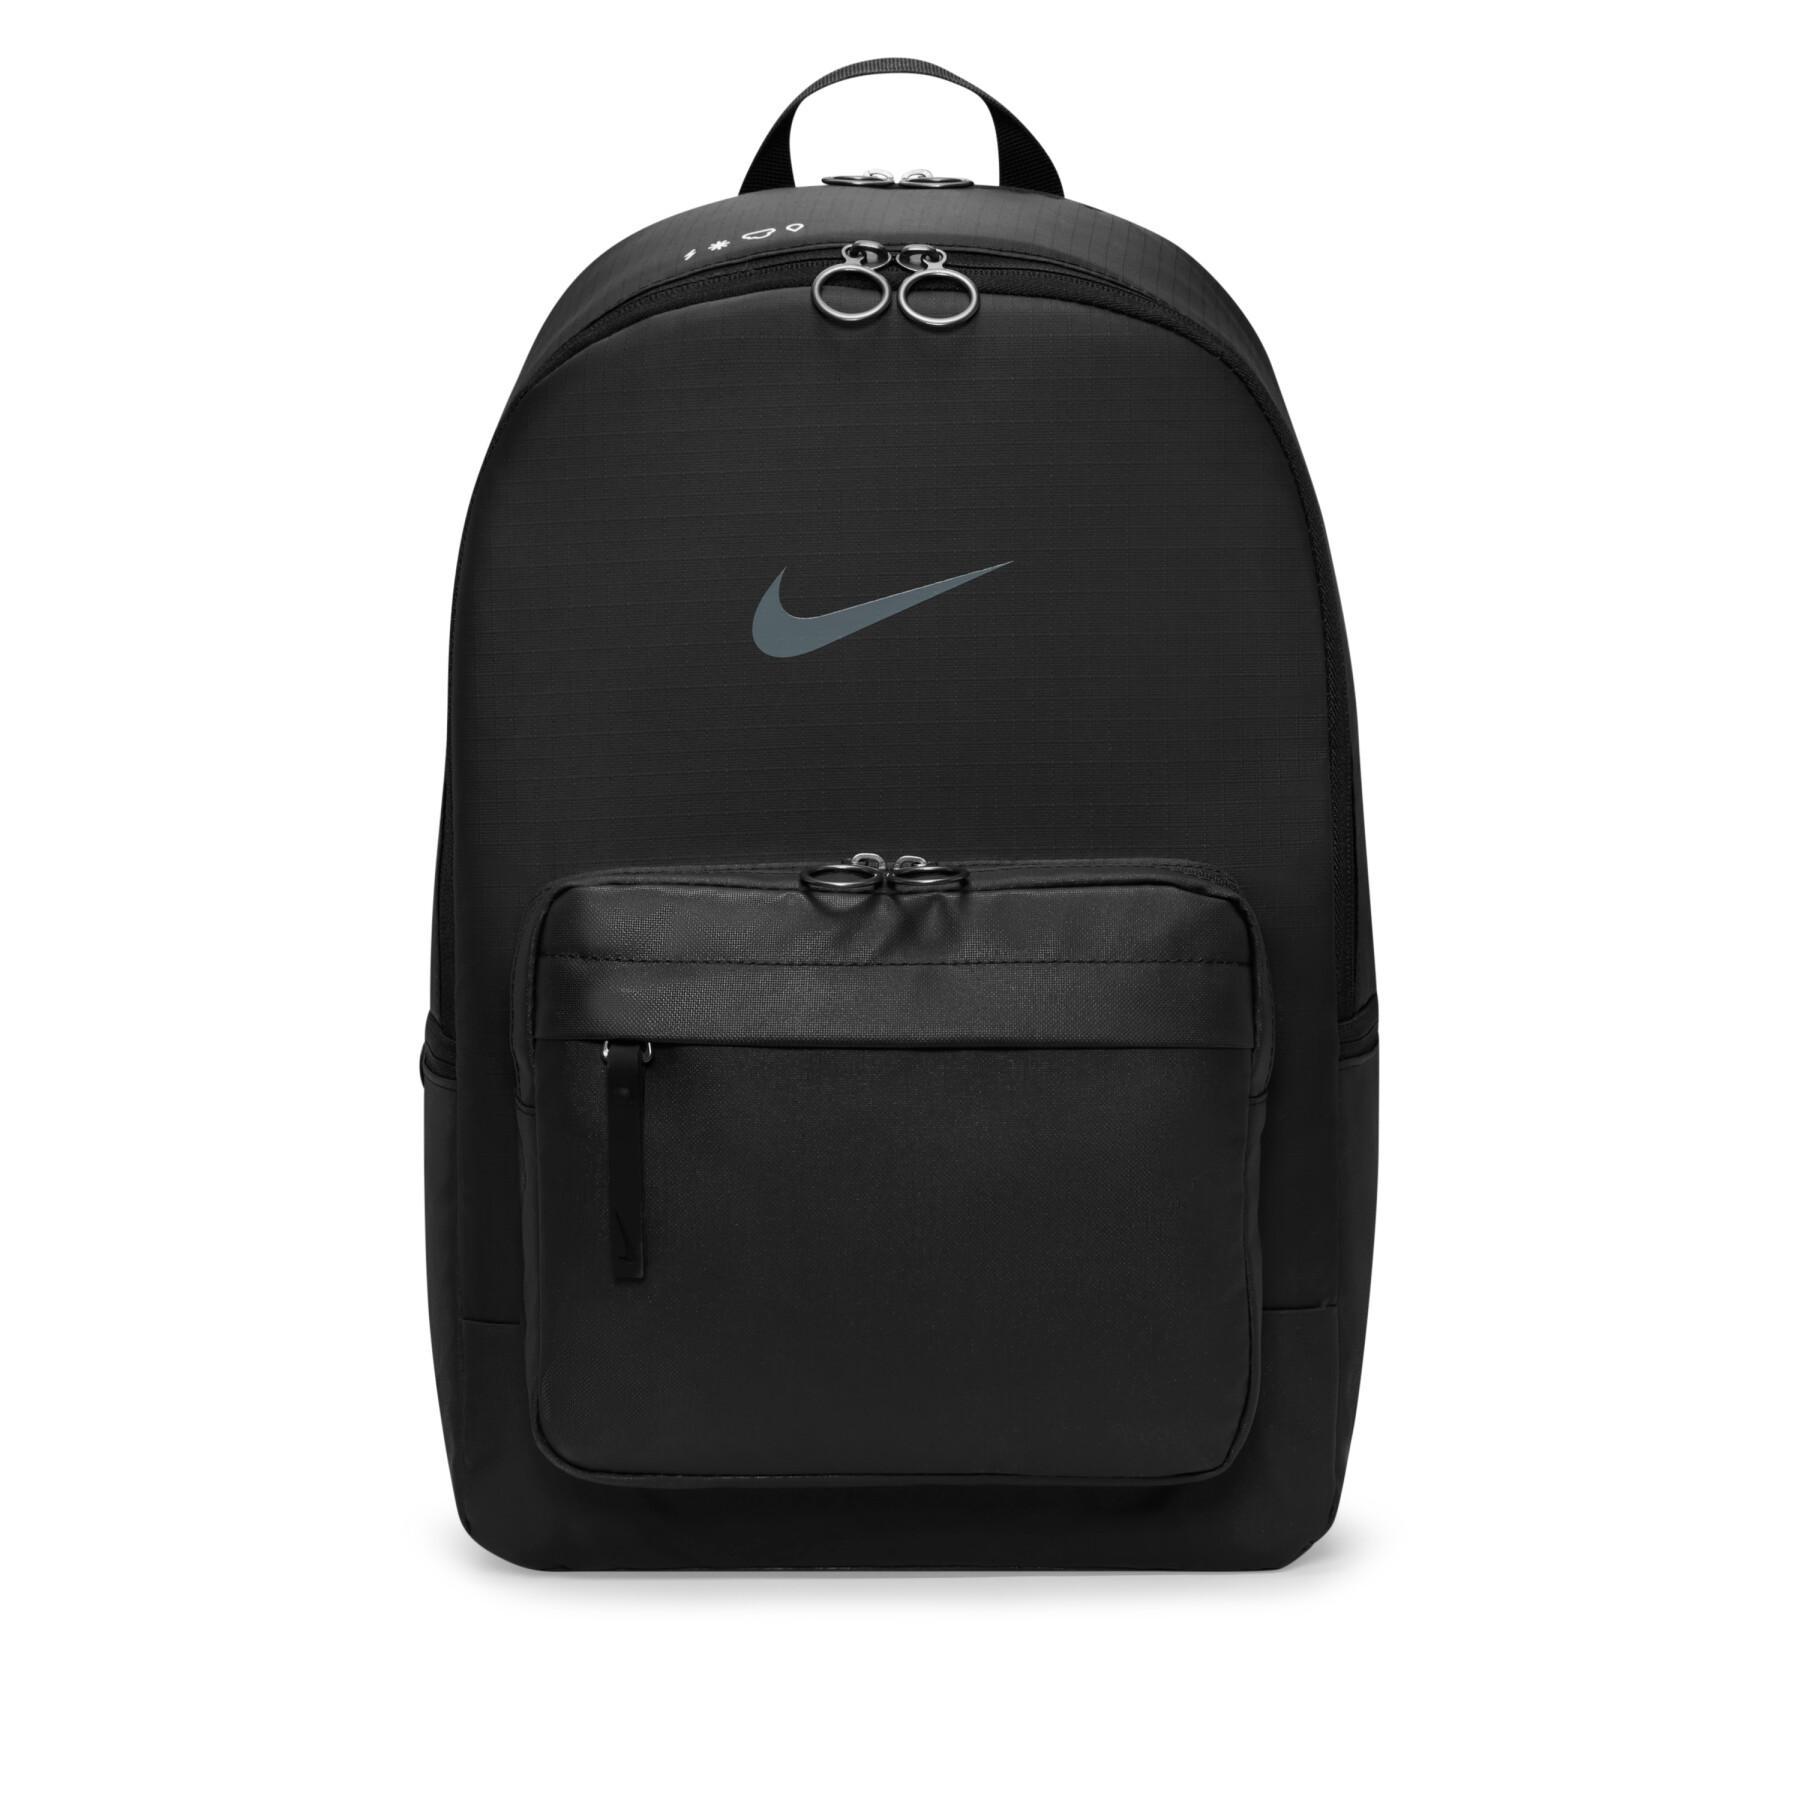 Backpack Nike Heritage 23L